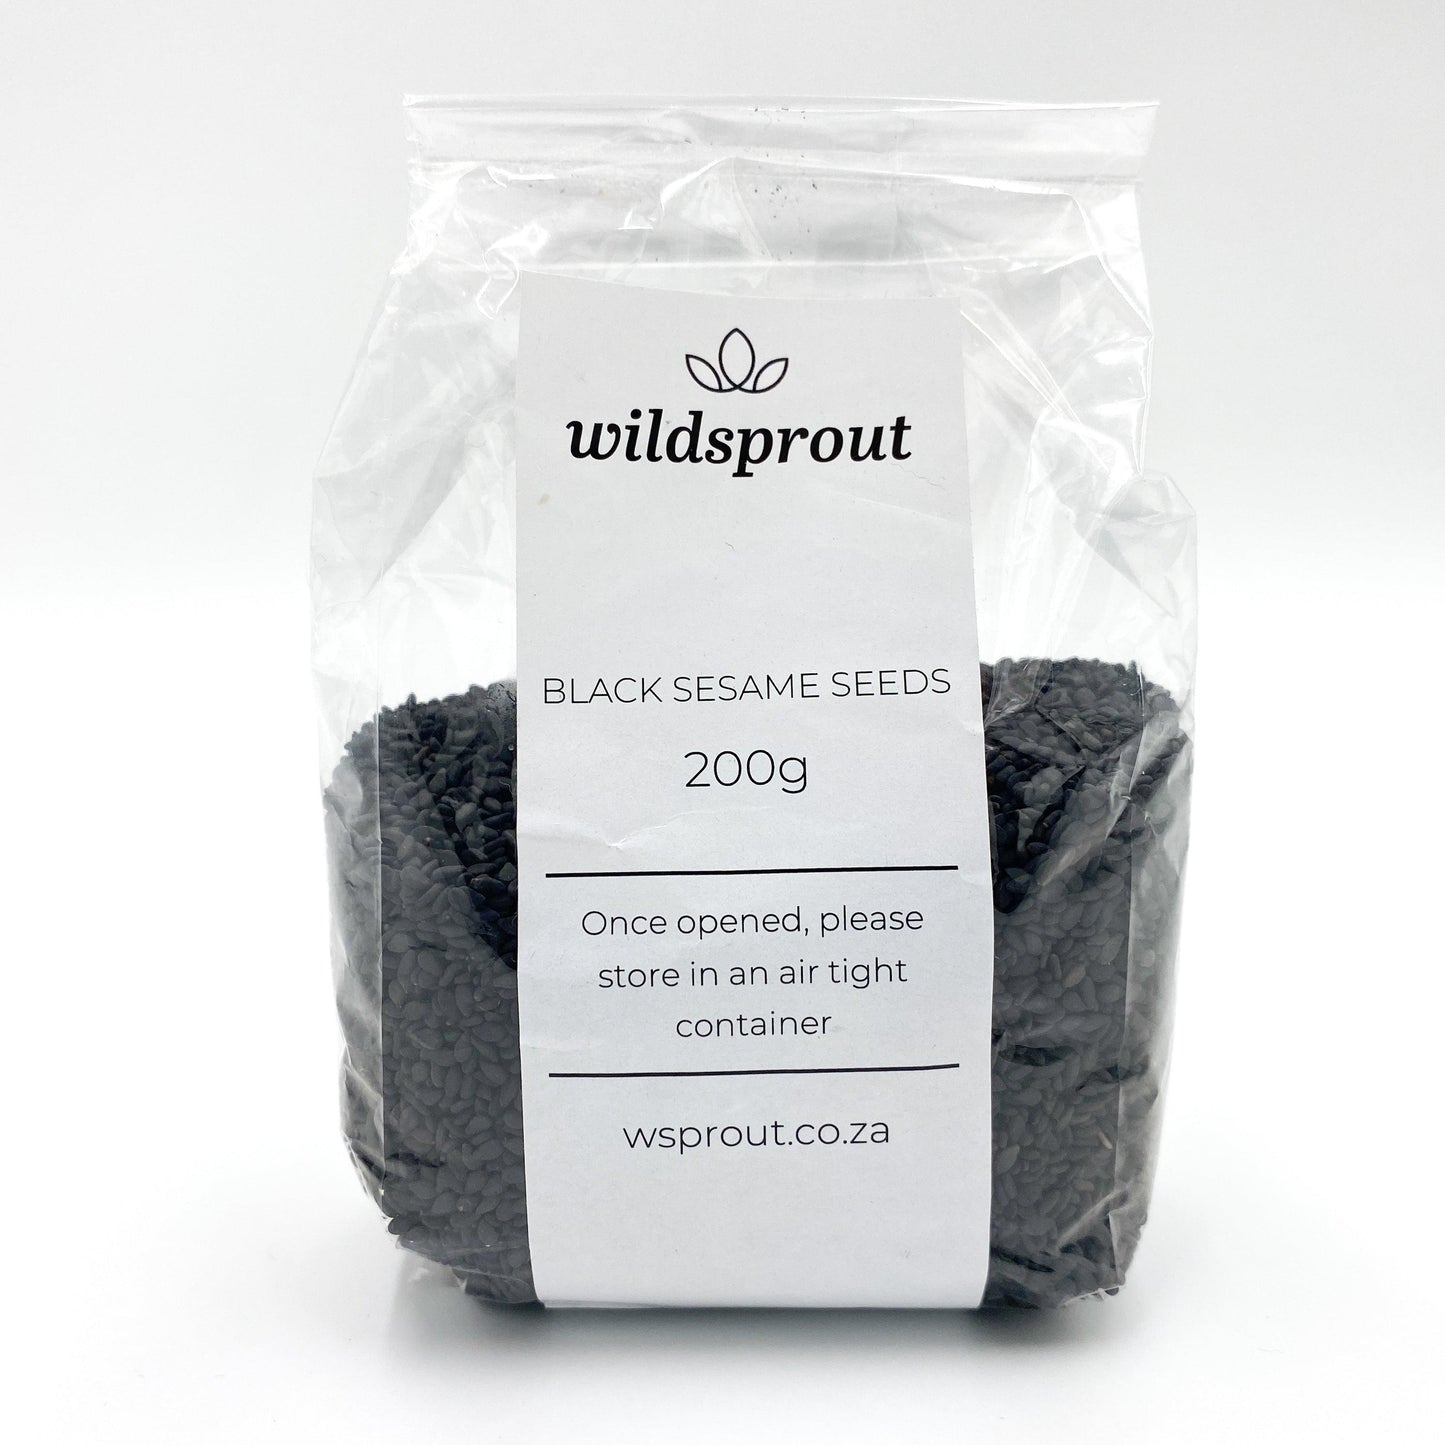 Black Sesame Seeds 200g - Wildsprout